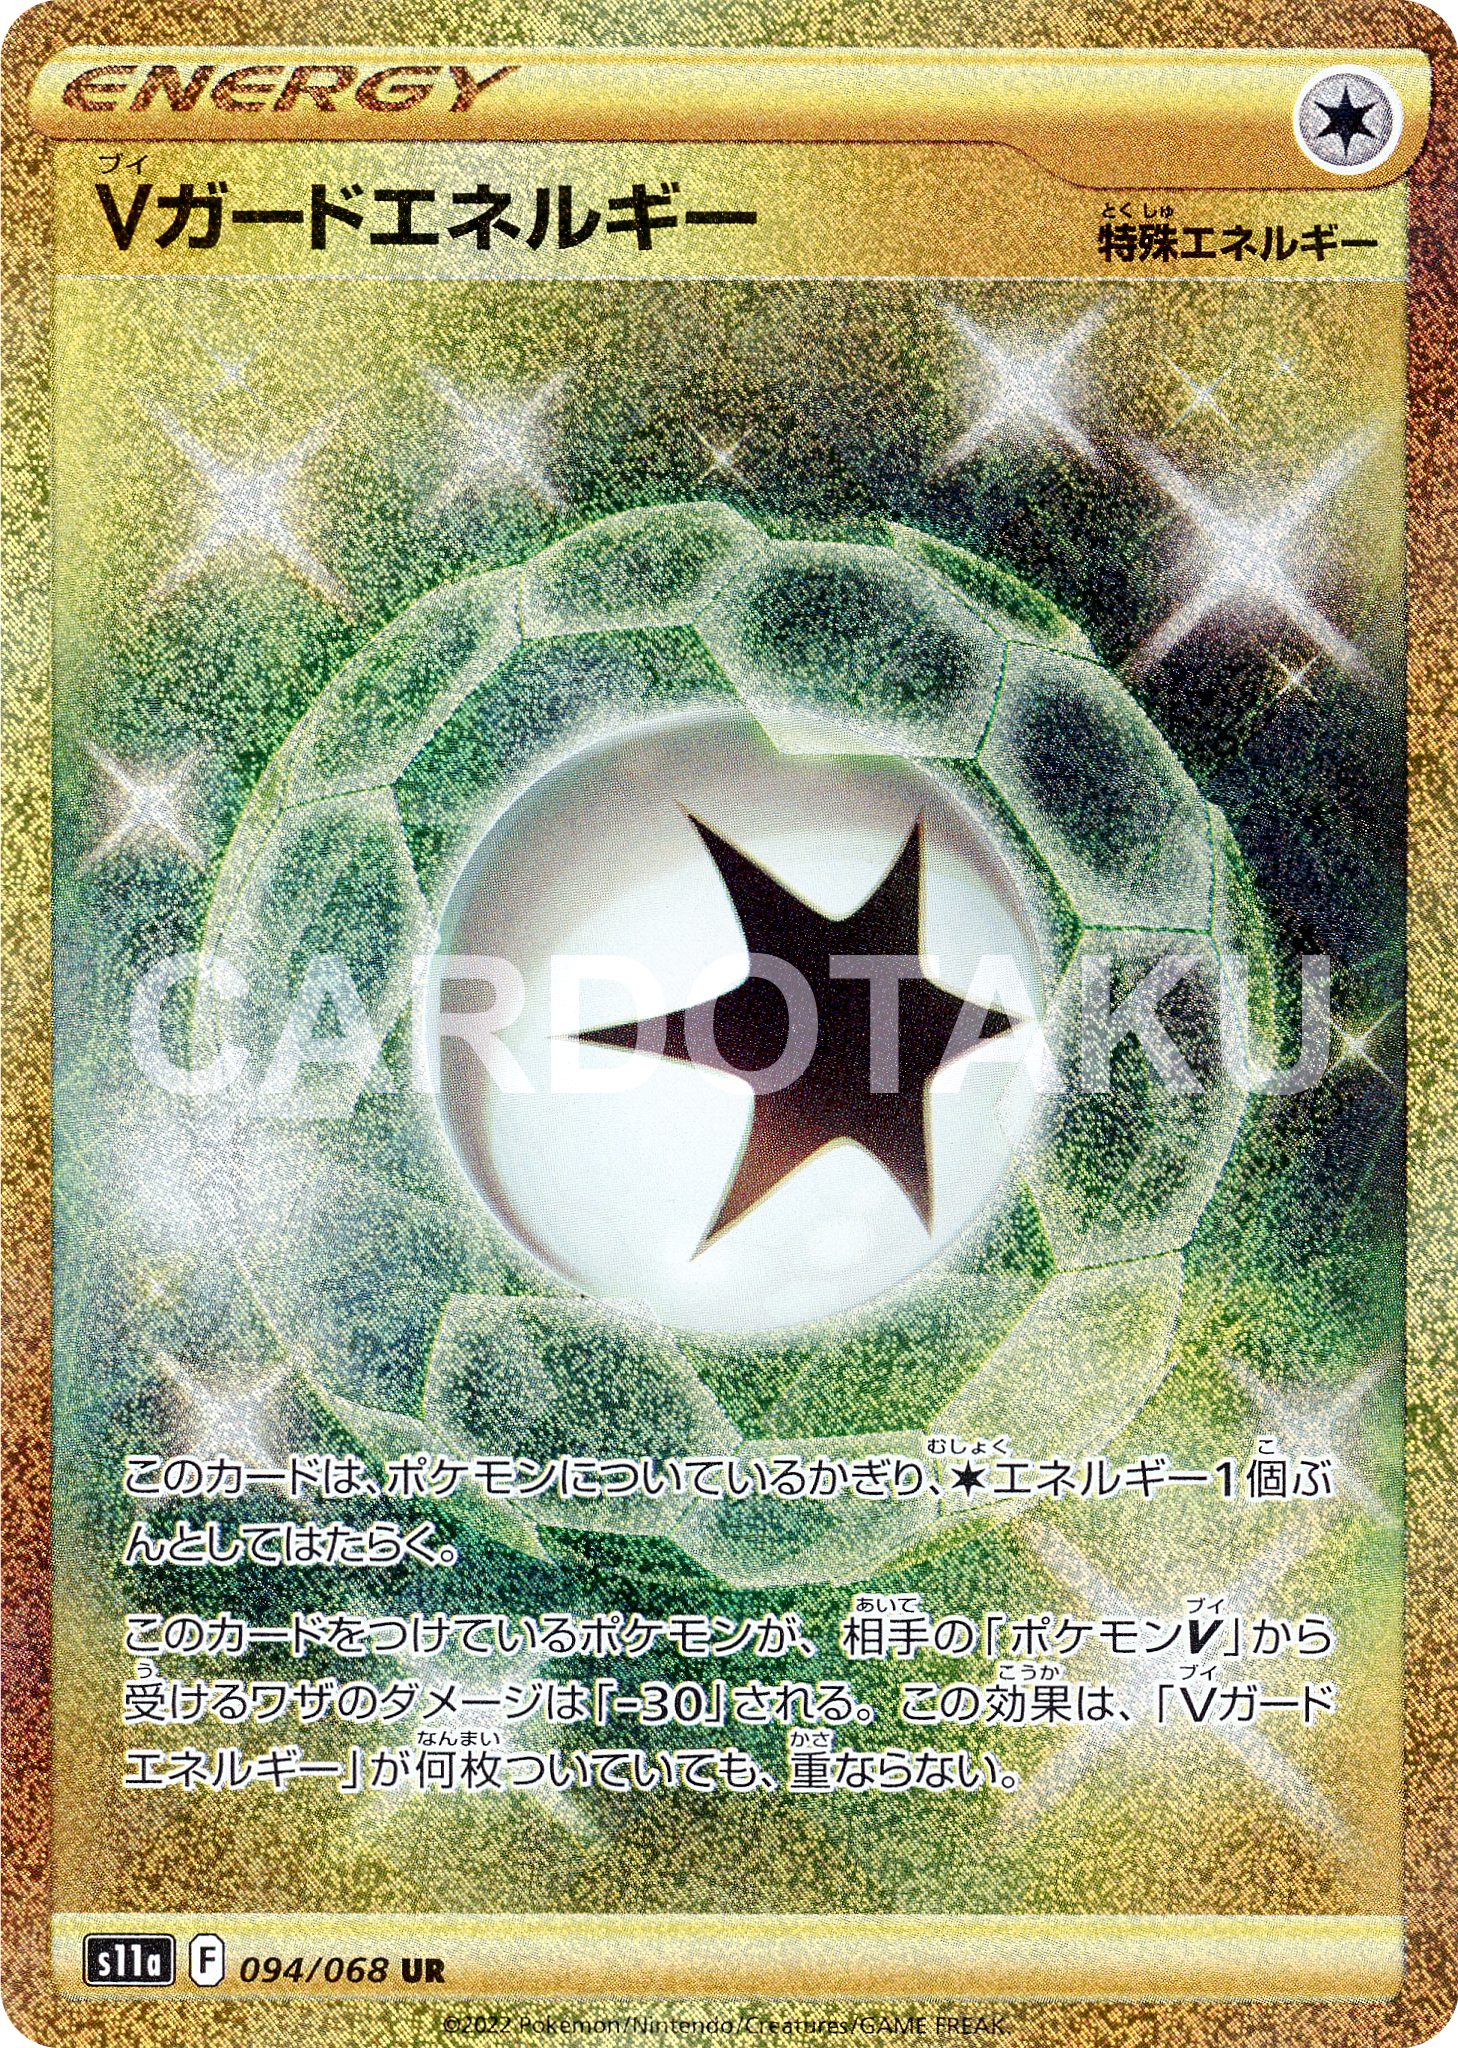 POKÉMON CARD GAME Sword & Shield Expansion pack ｢Incandescent Arcana｣  POKÉMON CARD GAME s11a 094/068 Ultra Rare card  V Guard Energy